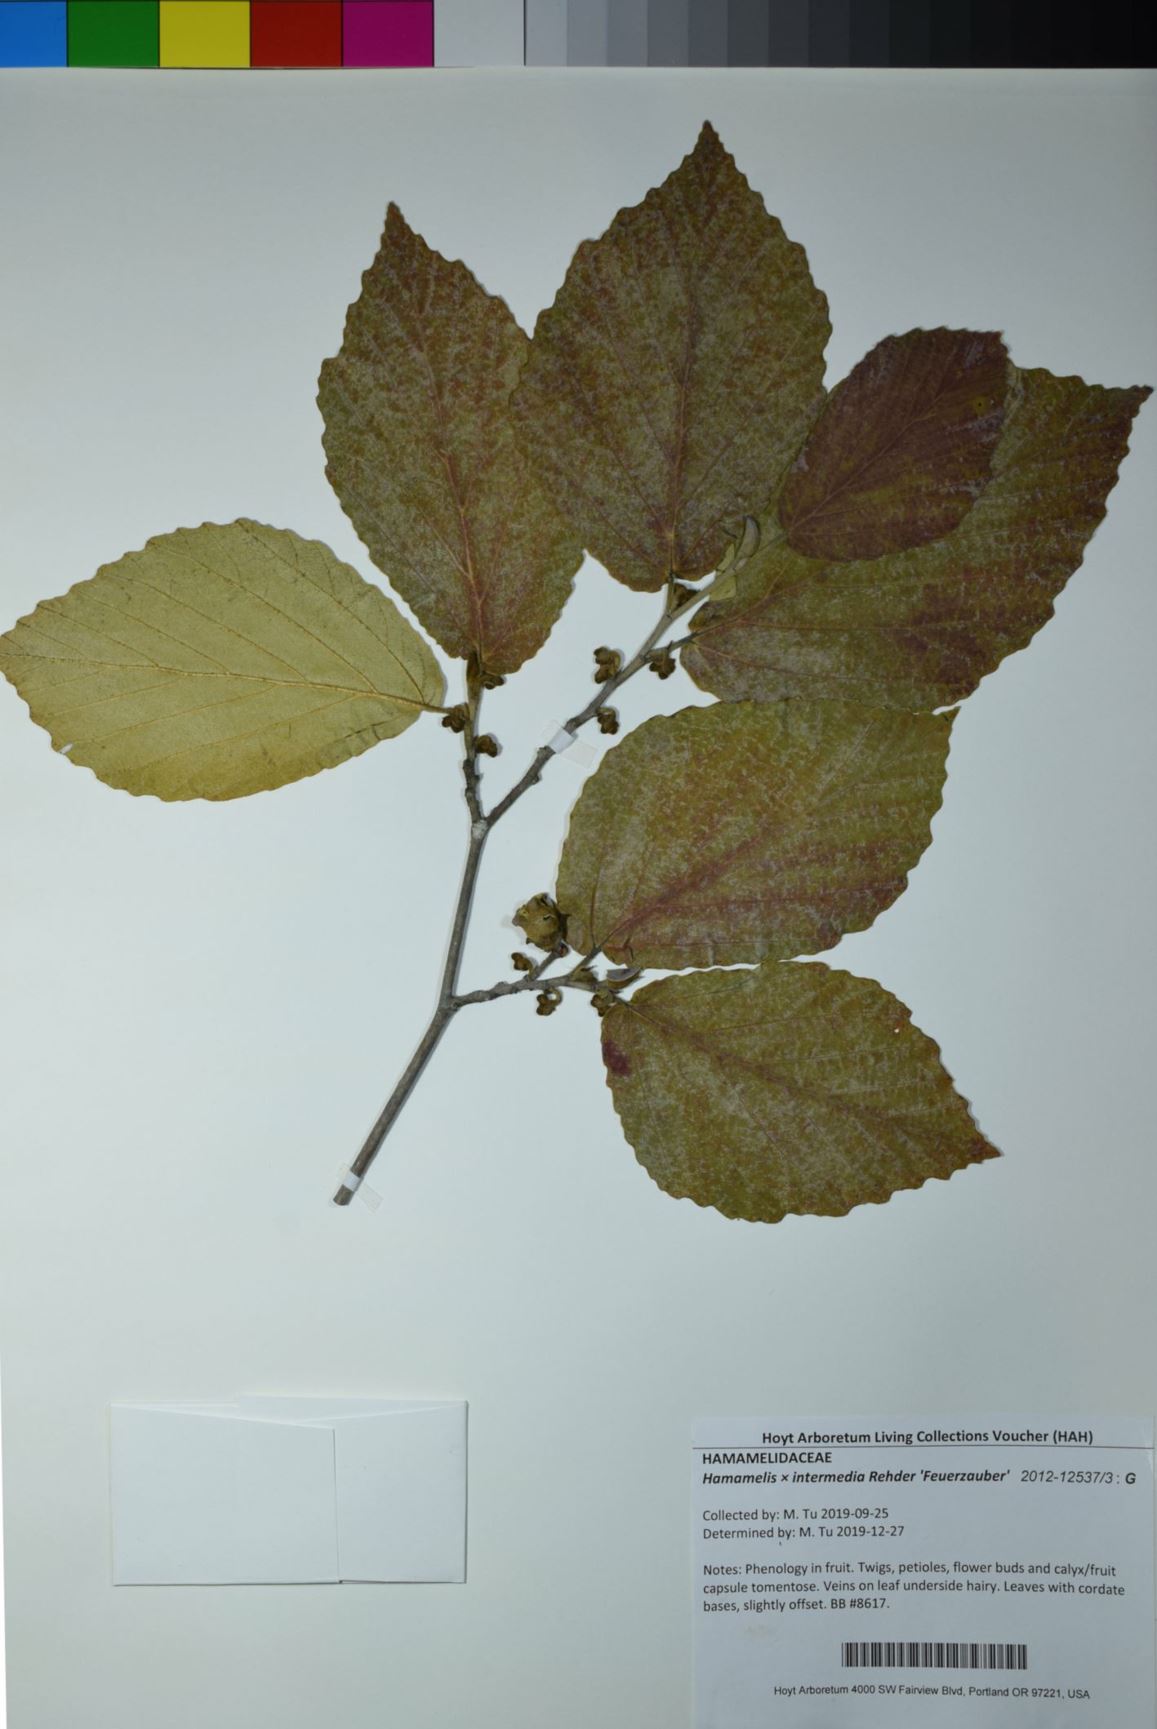 Hamamelis × intermedia 'Feuerzauber'